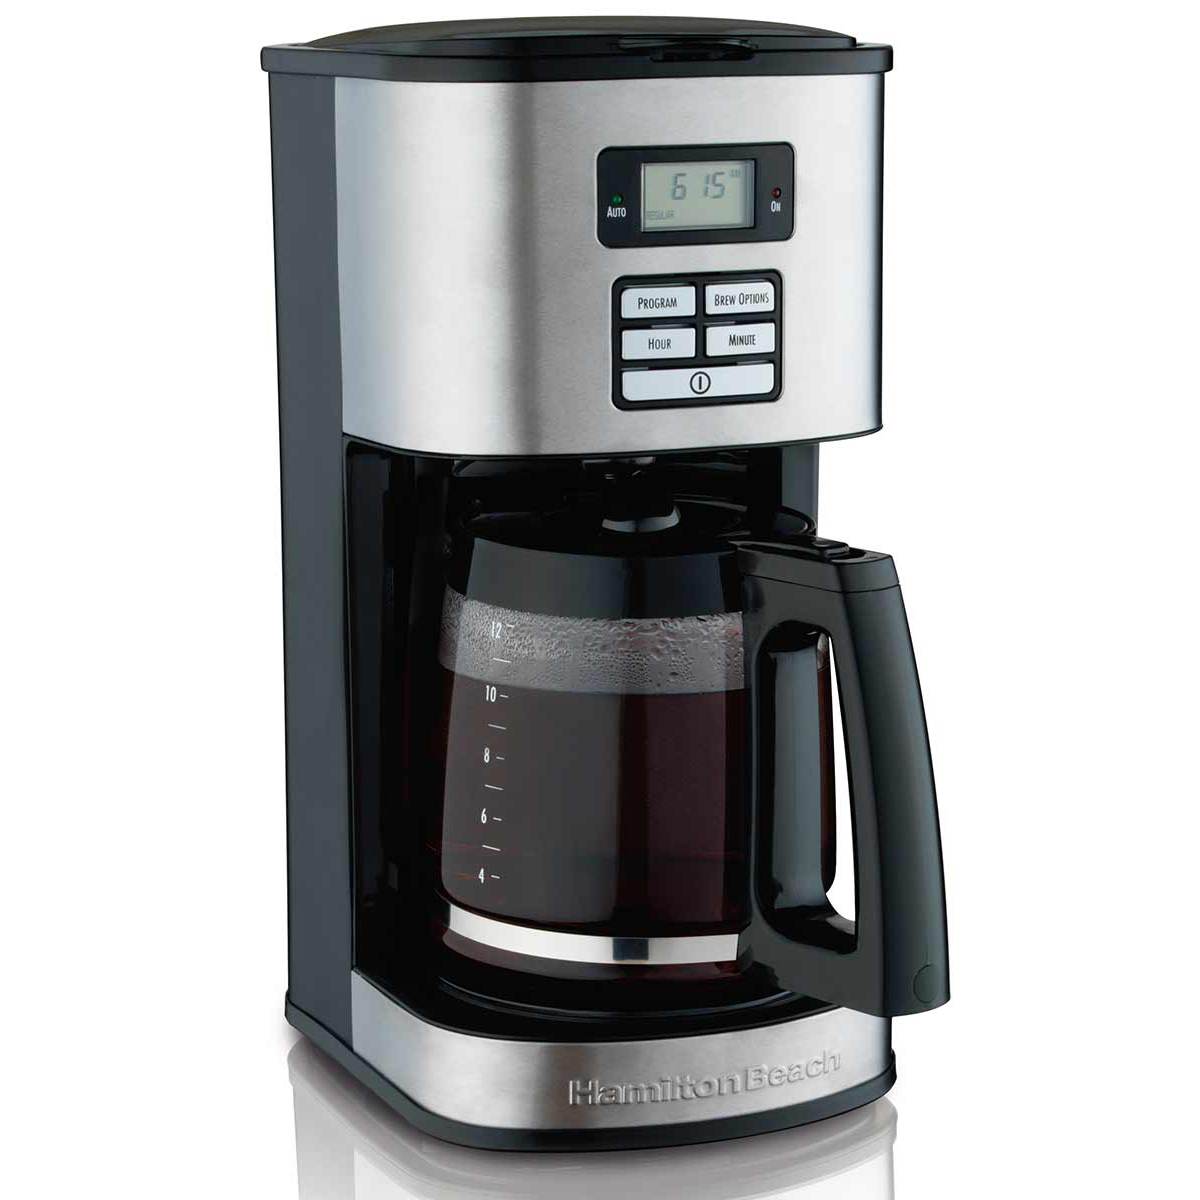 Hamilton Beach 12-Cup Coffee Maker Programmable for Cone